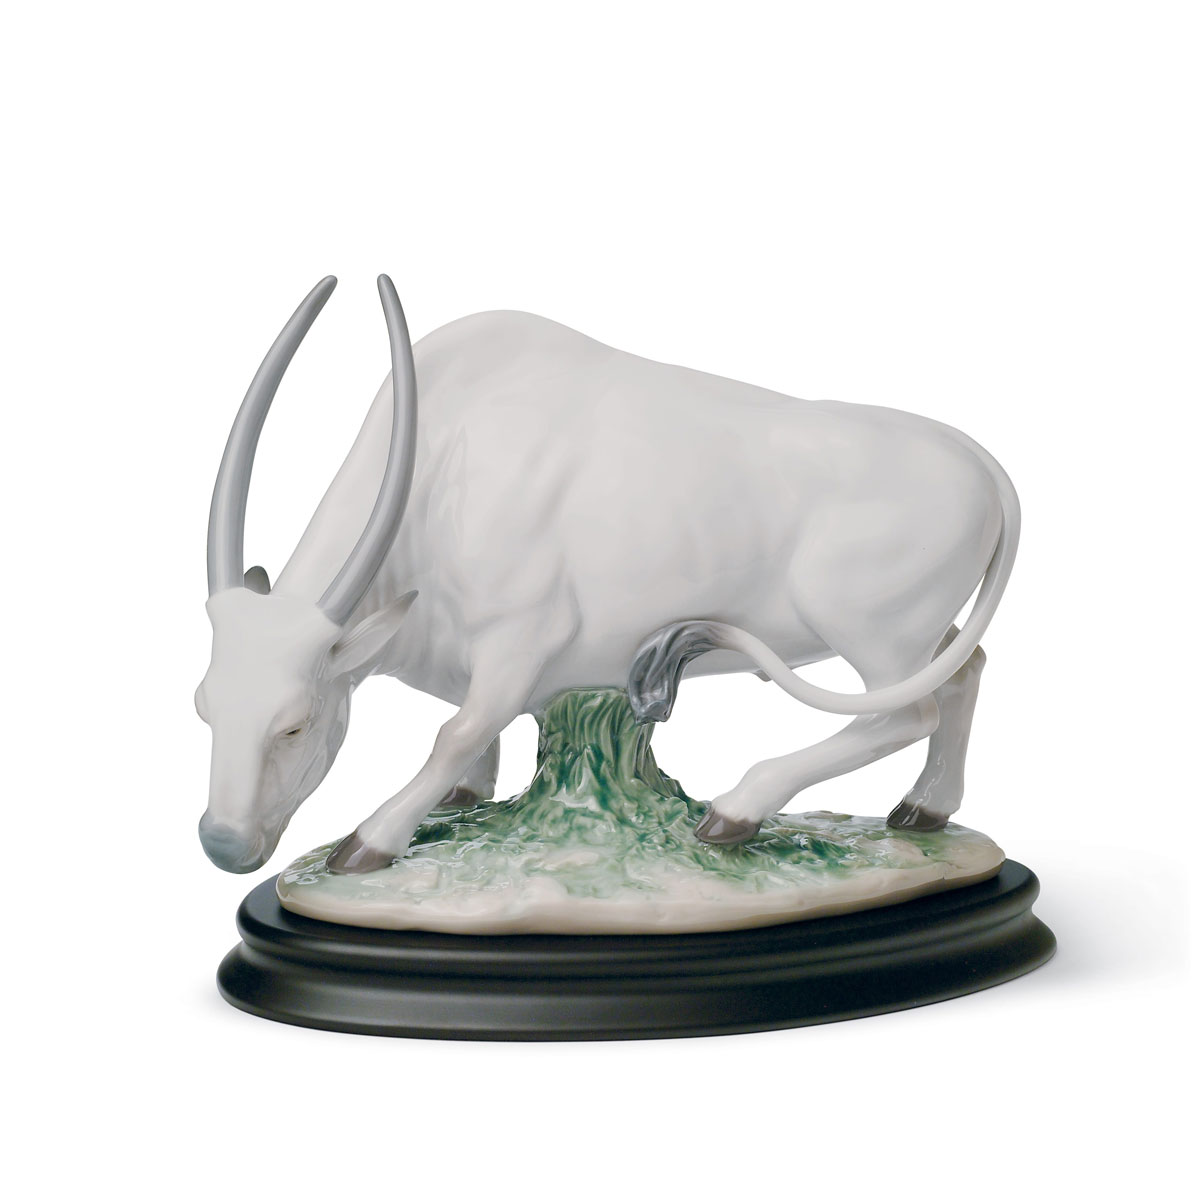 Lladro Classic Sculpture, The Ox Figurine